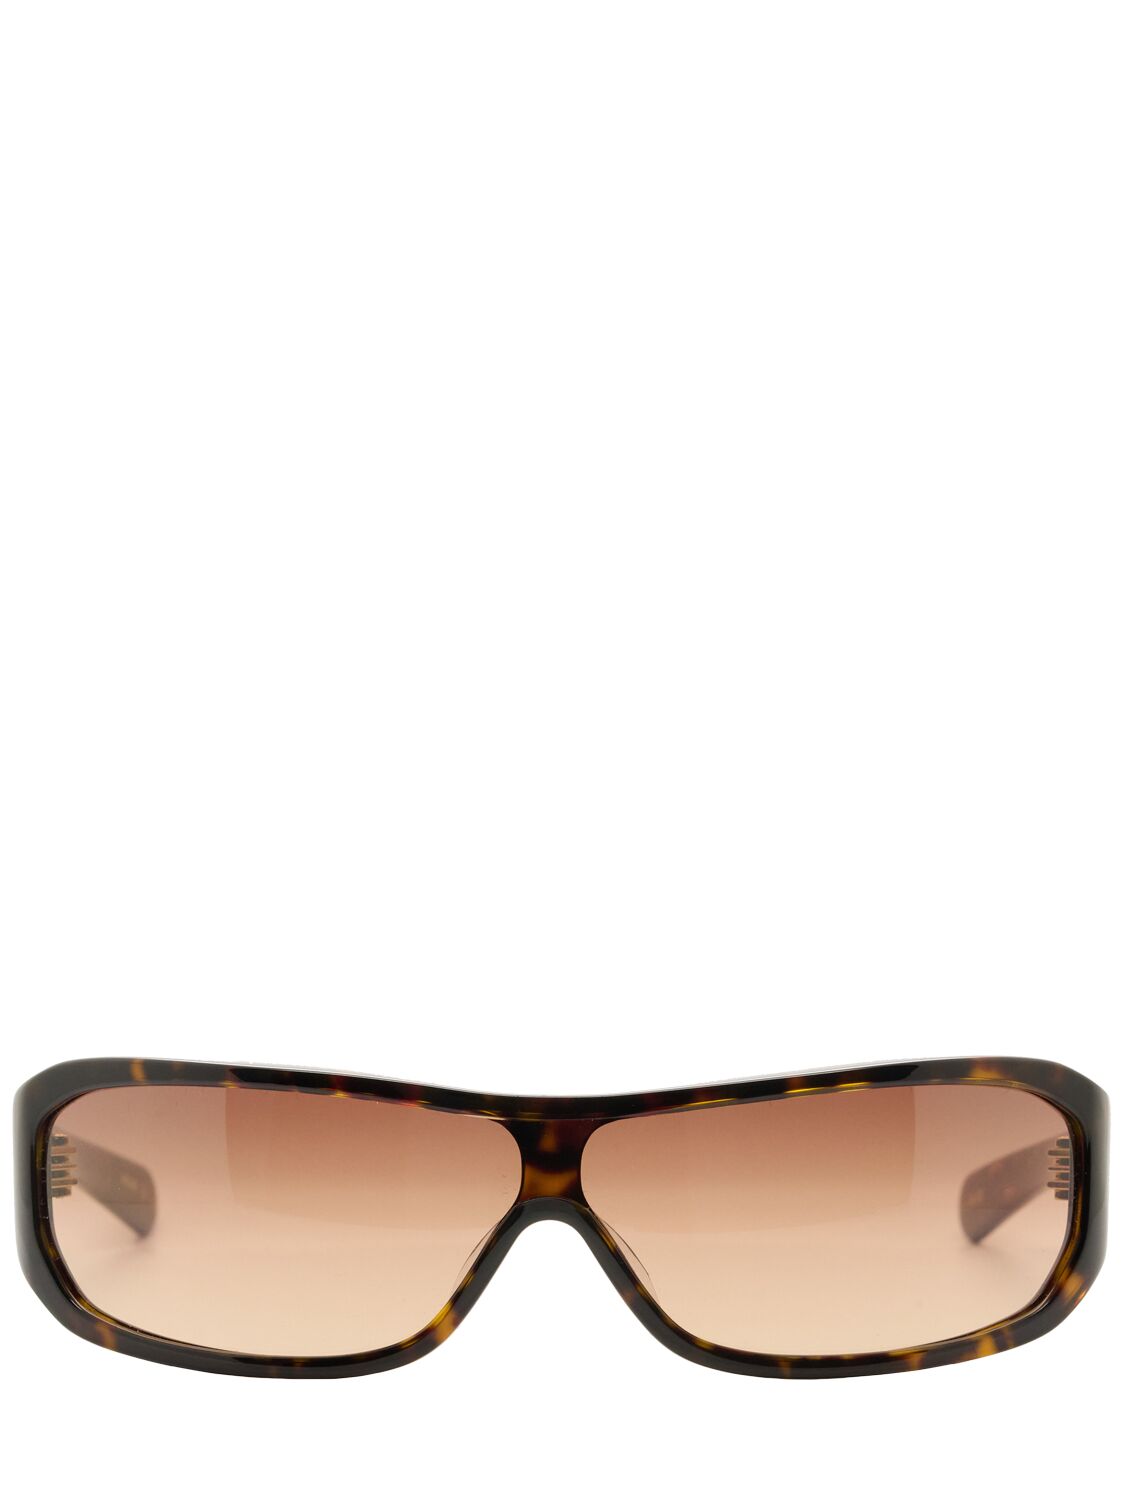 Flatlist Eyewear Zoe Acetate Sunglasses W/ Brown Lenses In Tortoiseshell